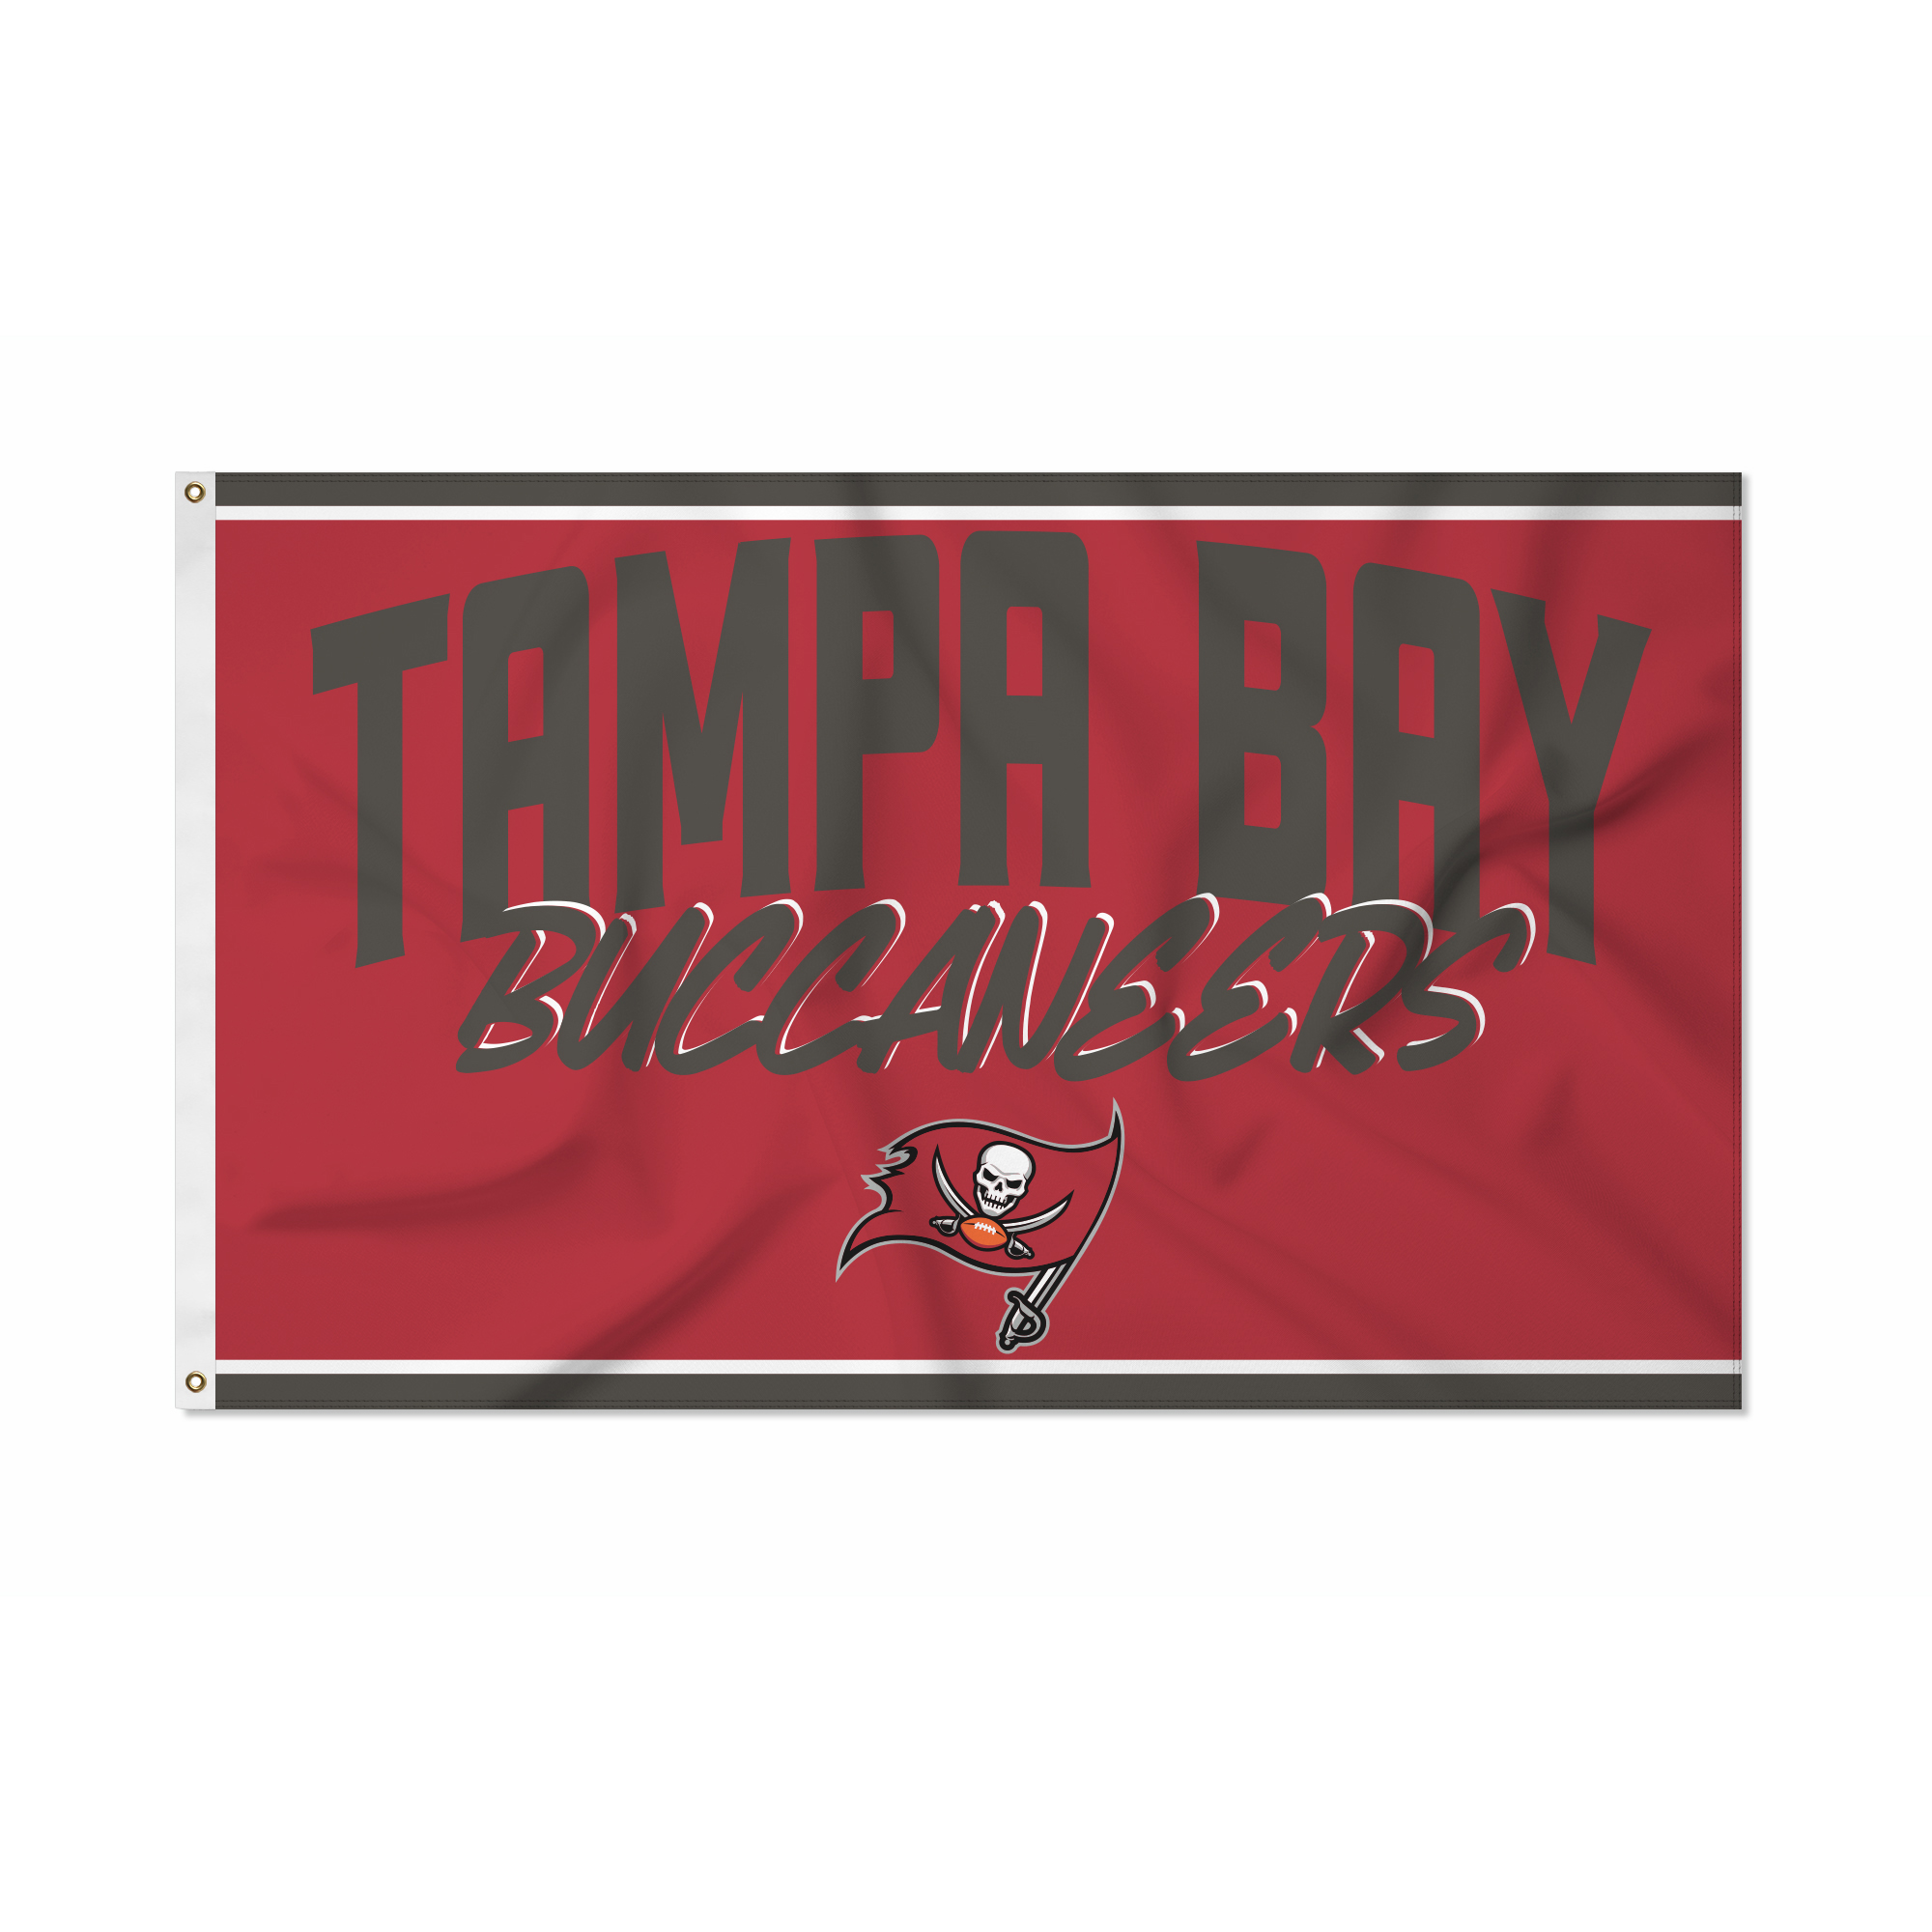 Rico Industries NFL Football Tampa Bay Buccaneers Script 3' x 5' Banner Flag